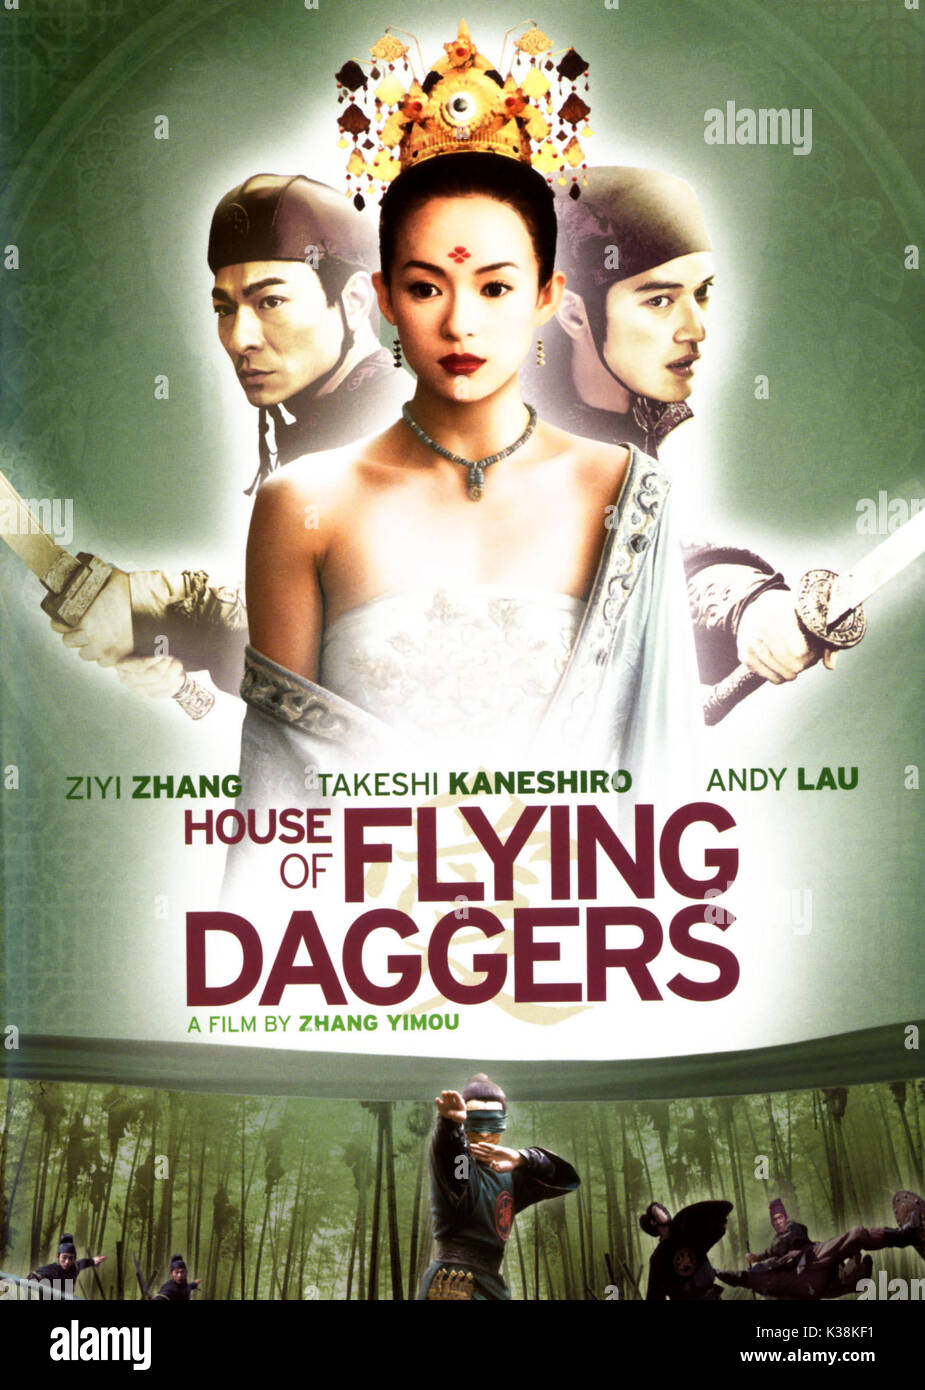 House Of Flying Daggers Wallpaper